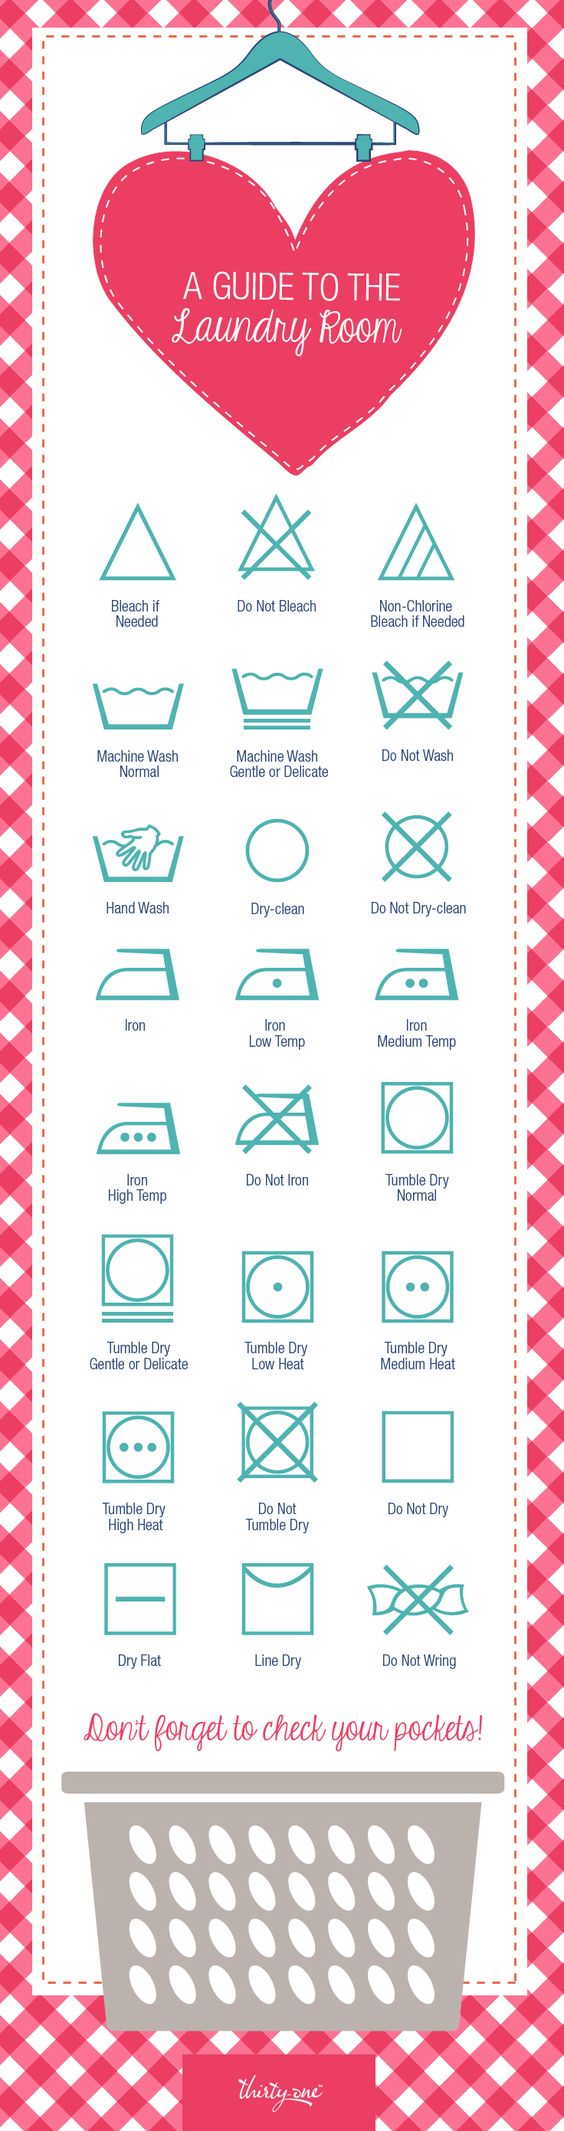 Laundry symbols meaning